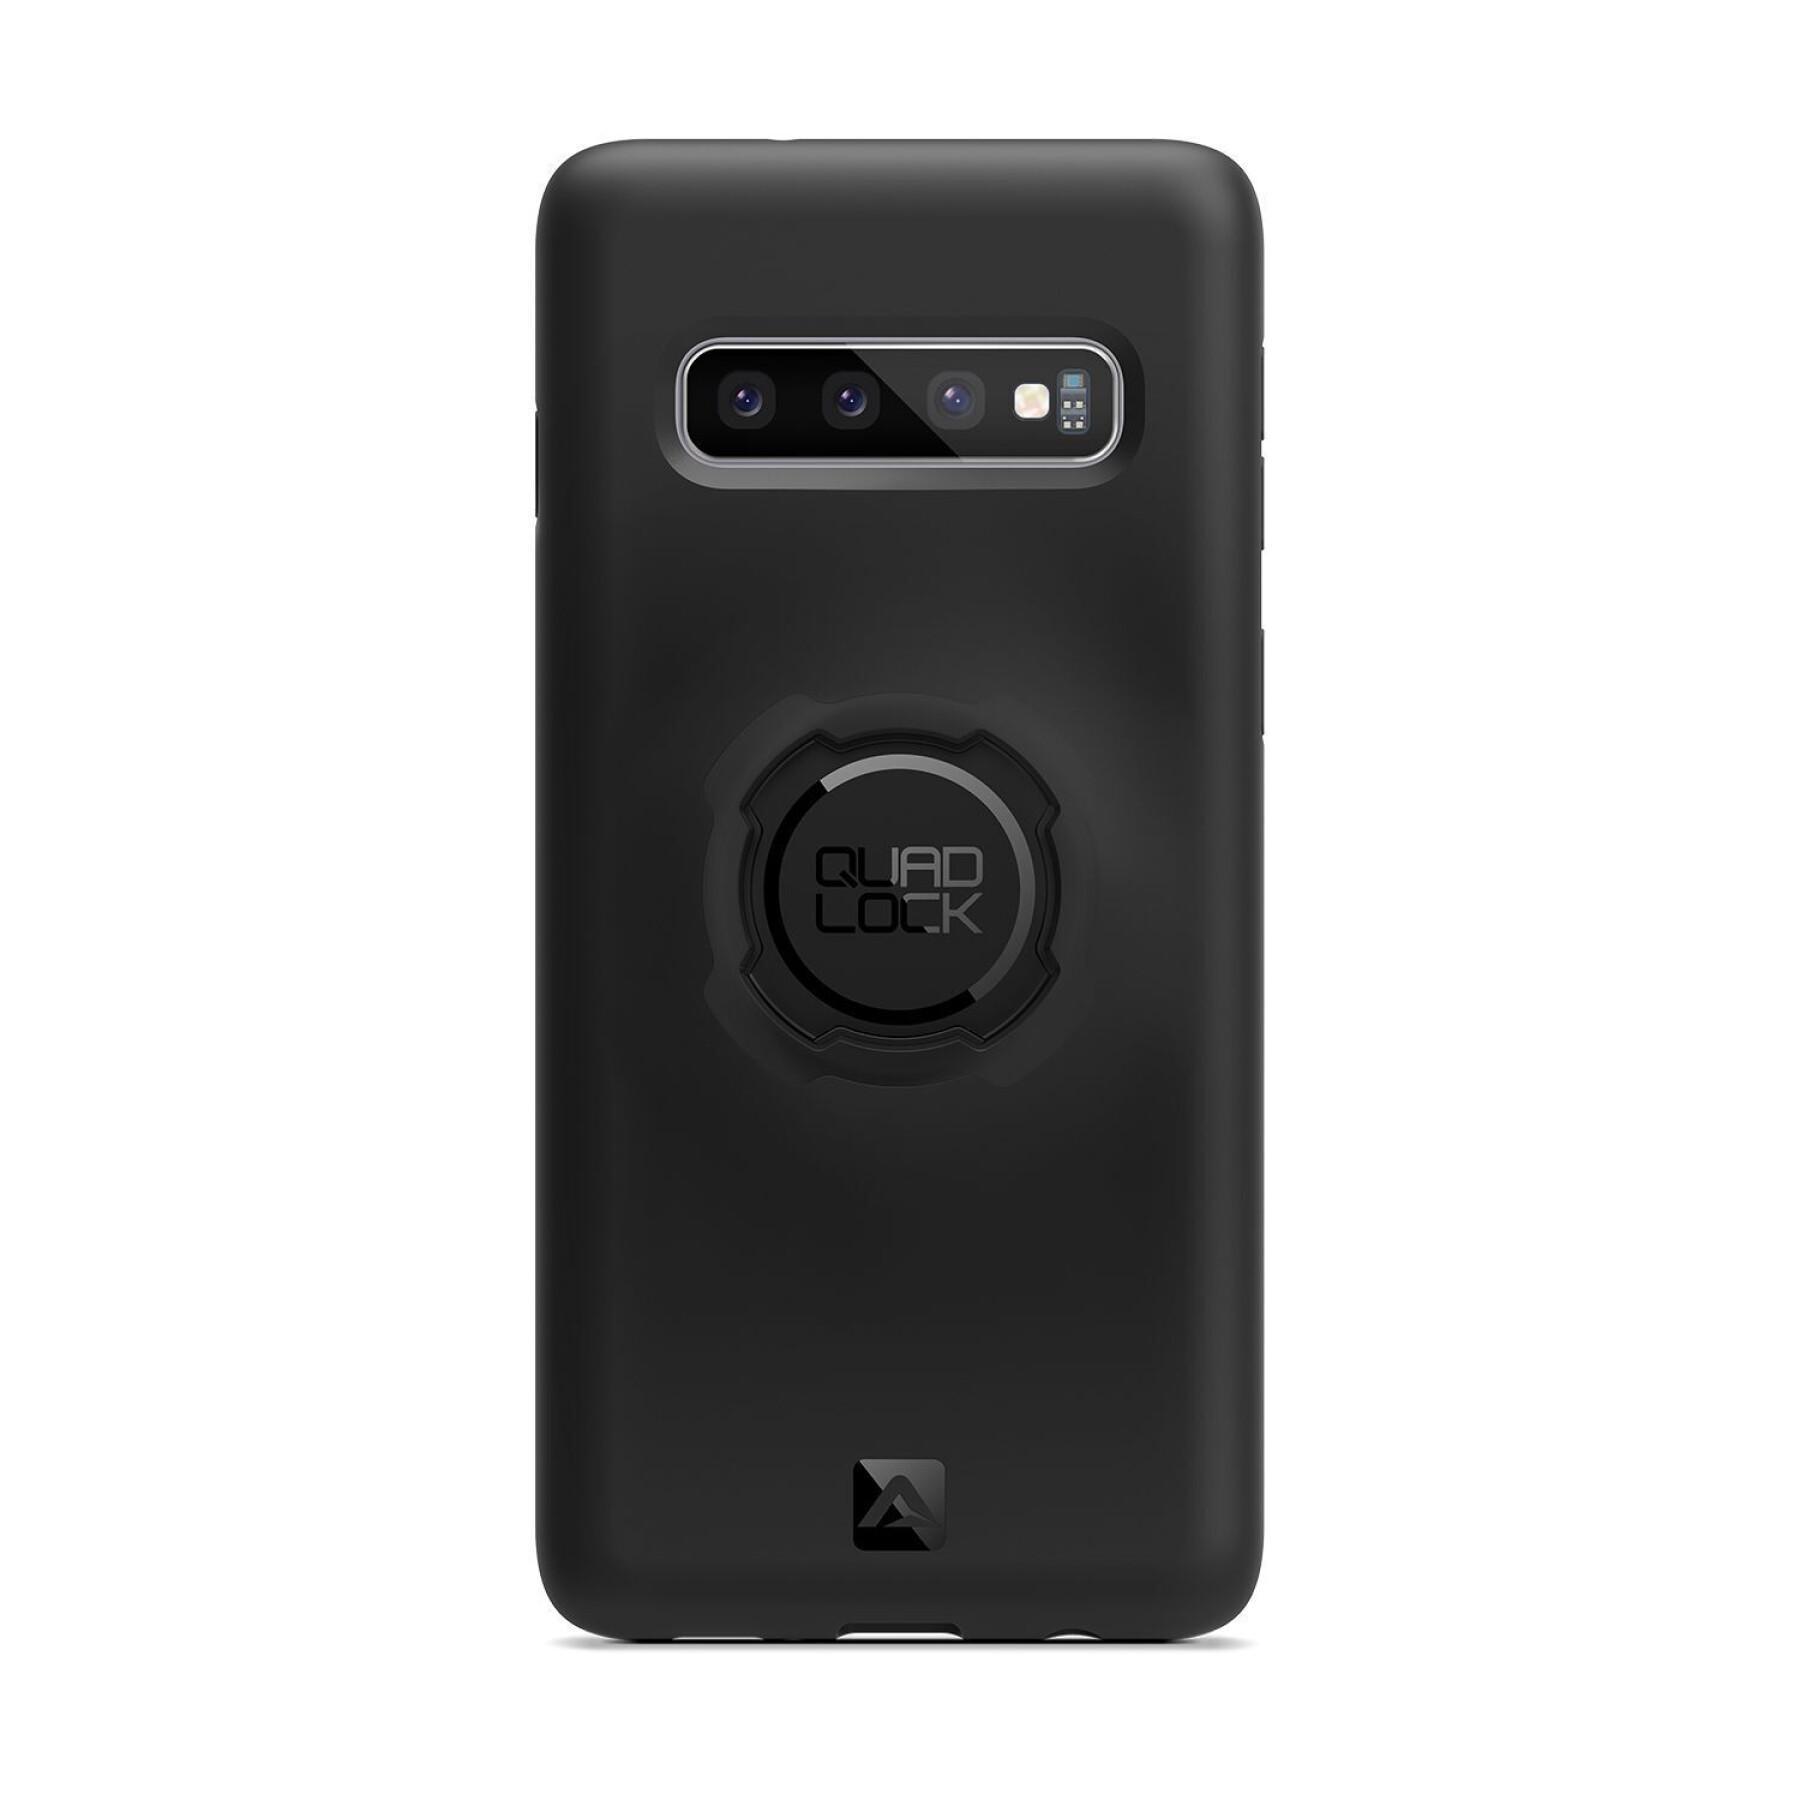 Smartphone case Quad Lock Galaxy S10